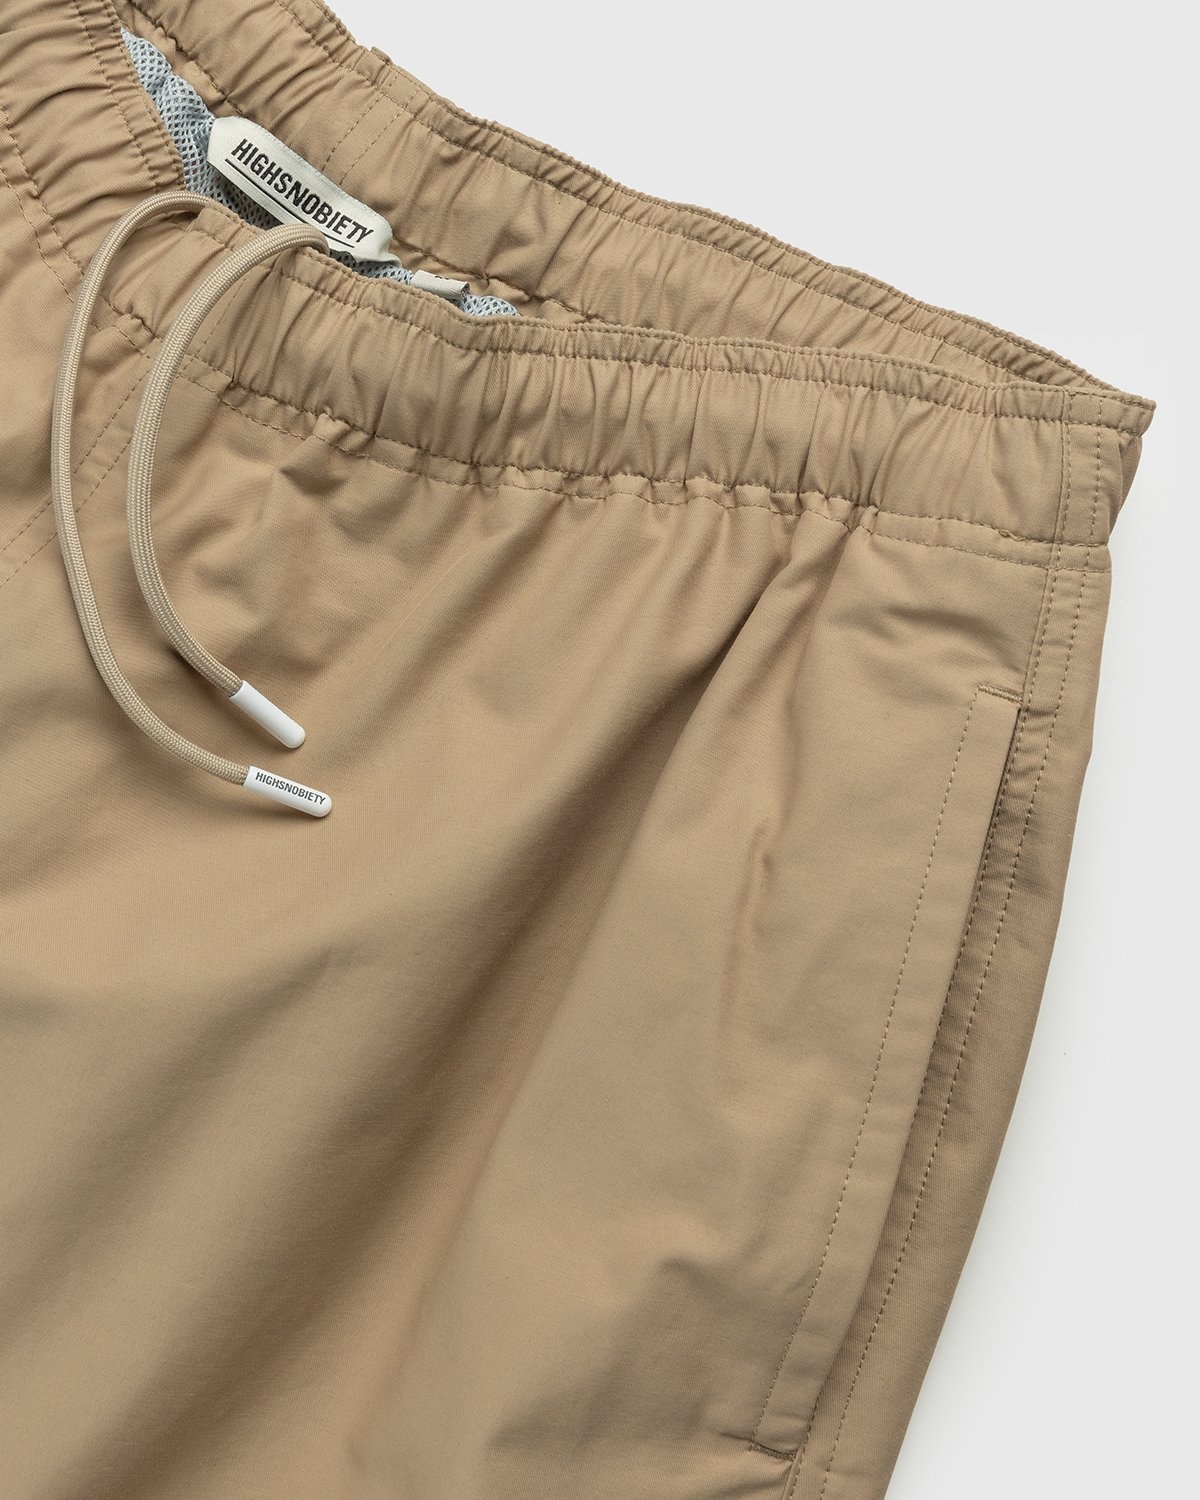 Highsnobiety – Cotton Nylon Water Shorts Beige - Active Shorts - Beige - Image 4